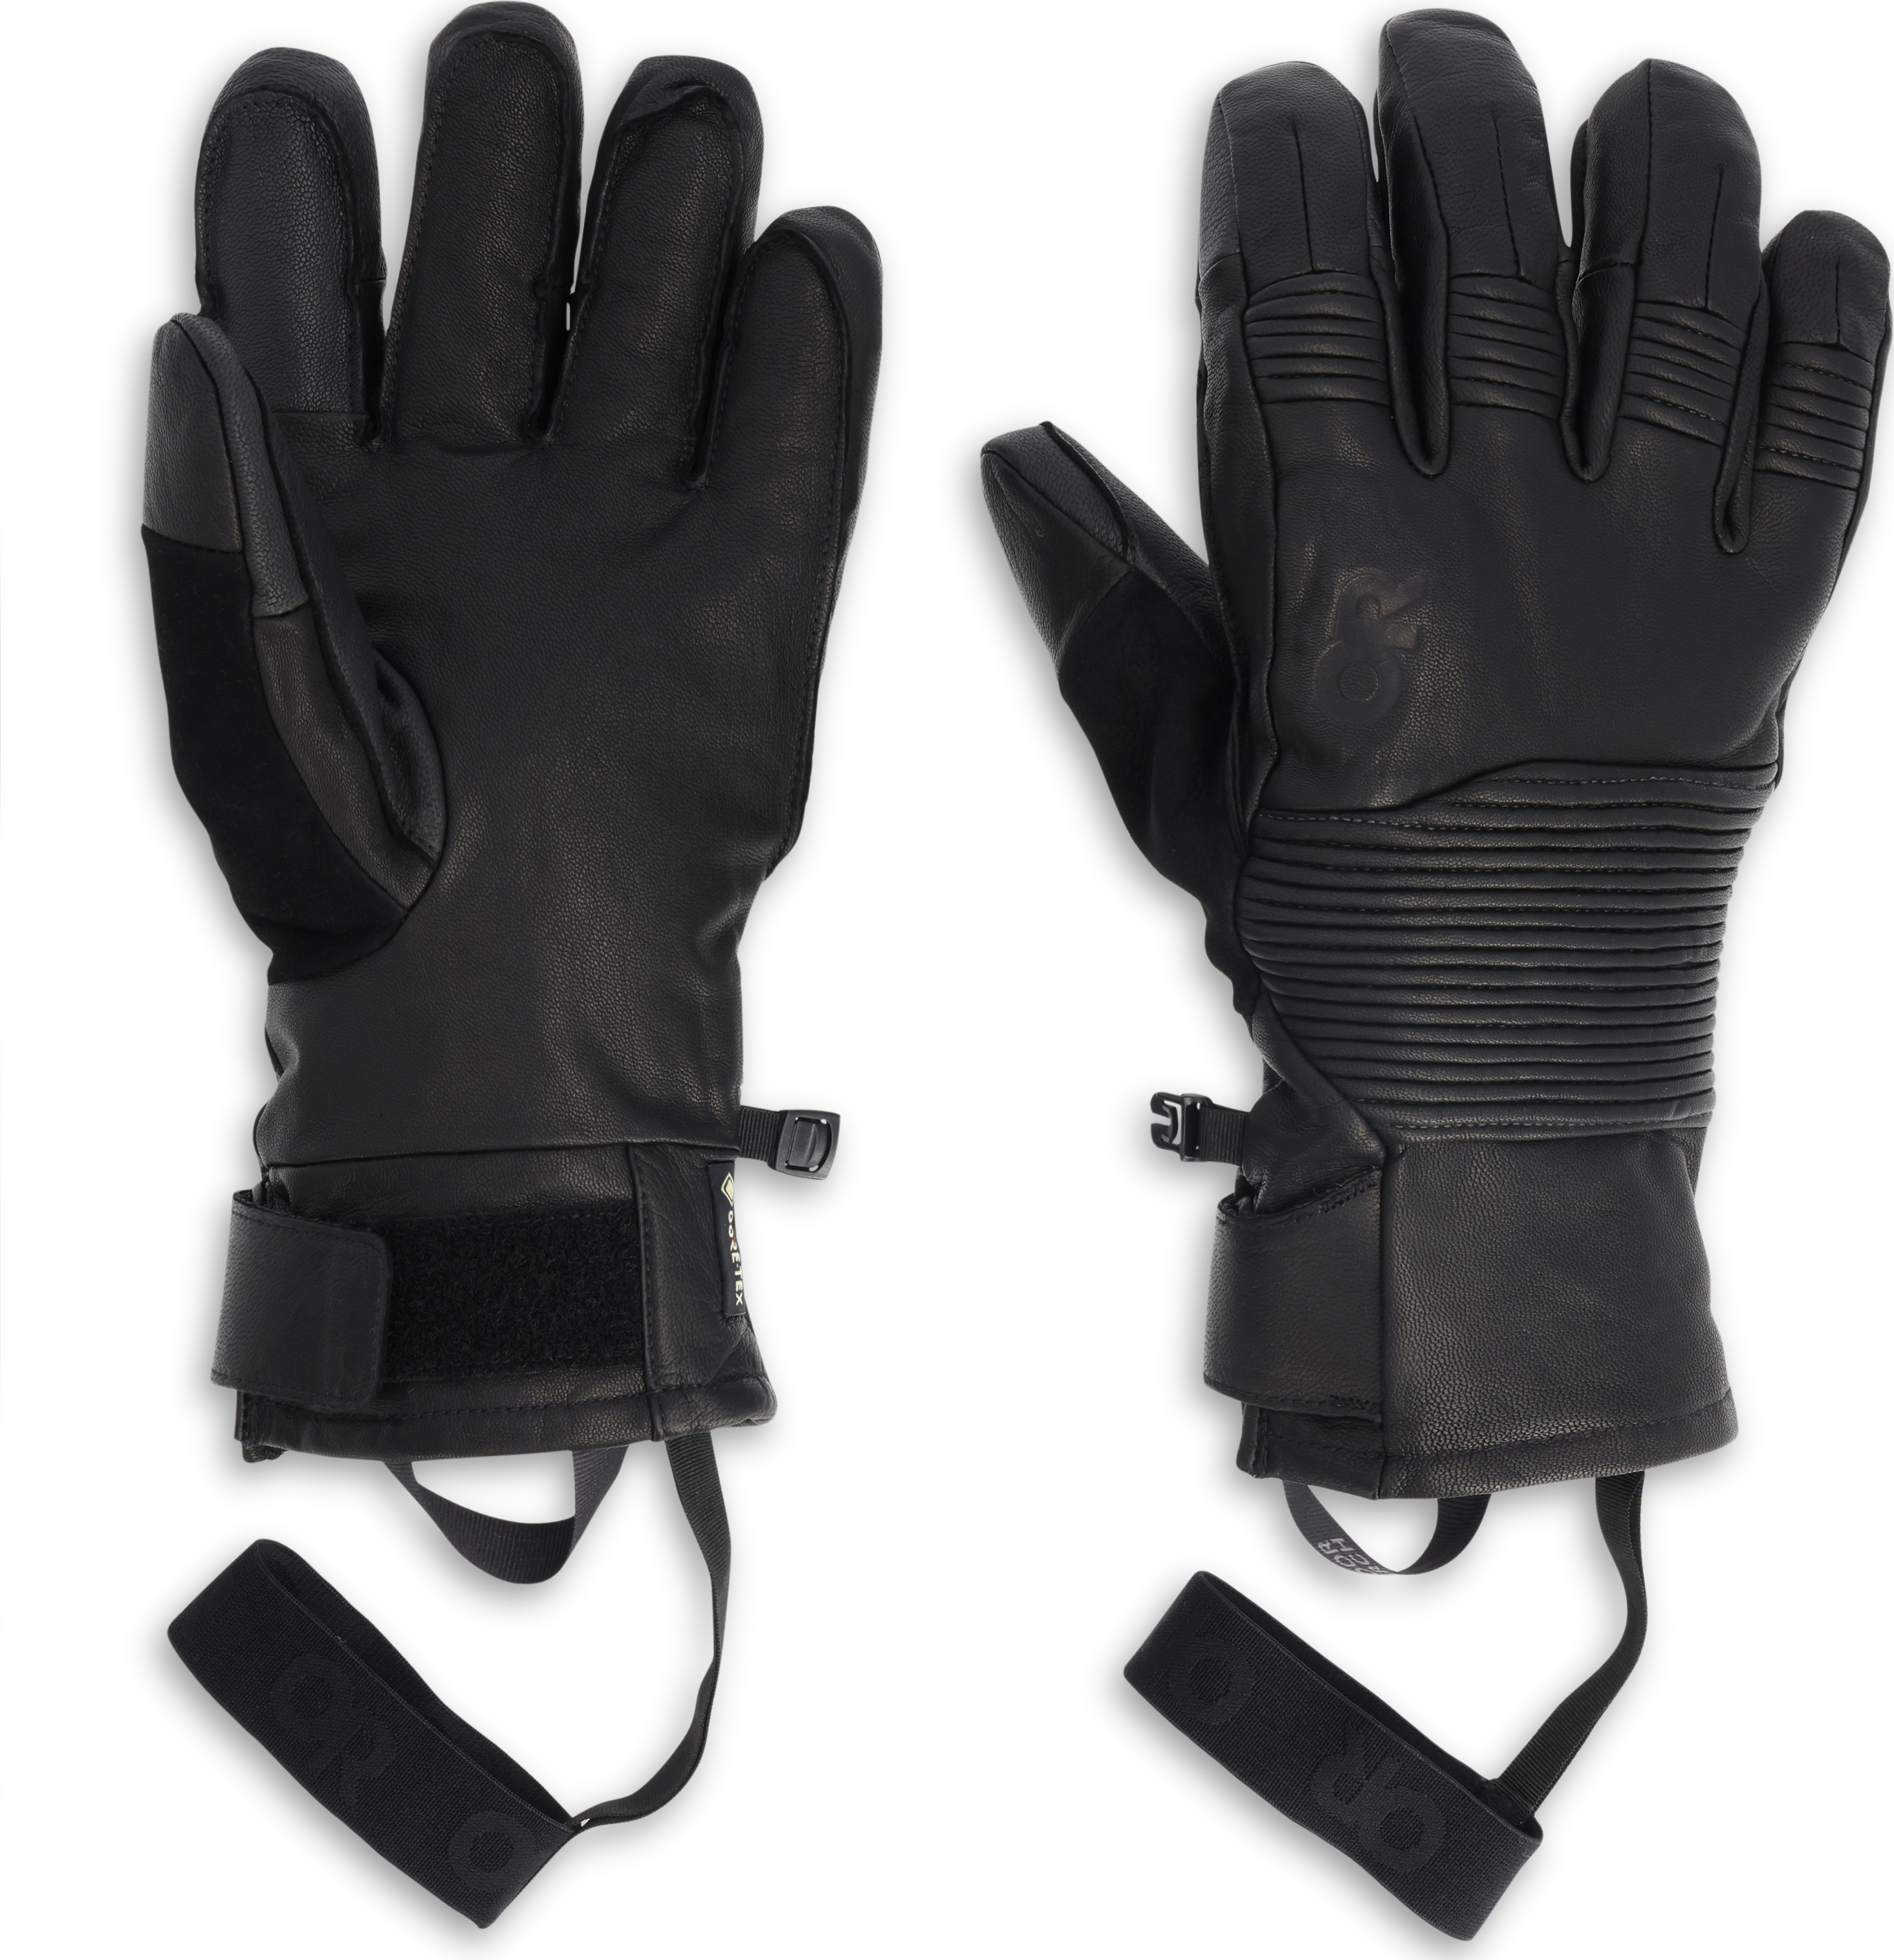 Men's Point N Chute Gore-Tex Sensor Gloves Black